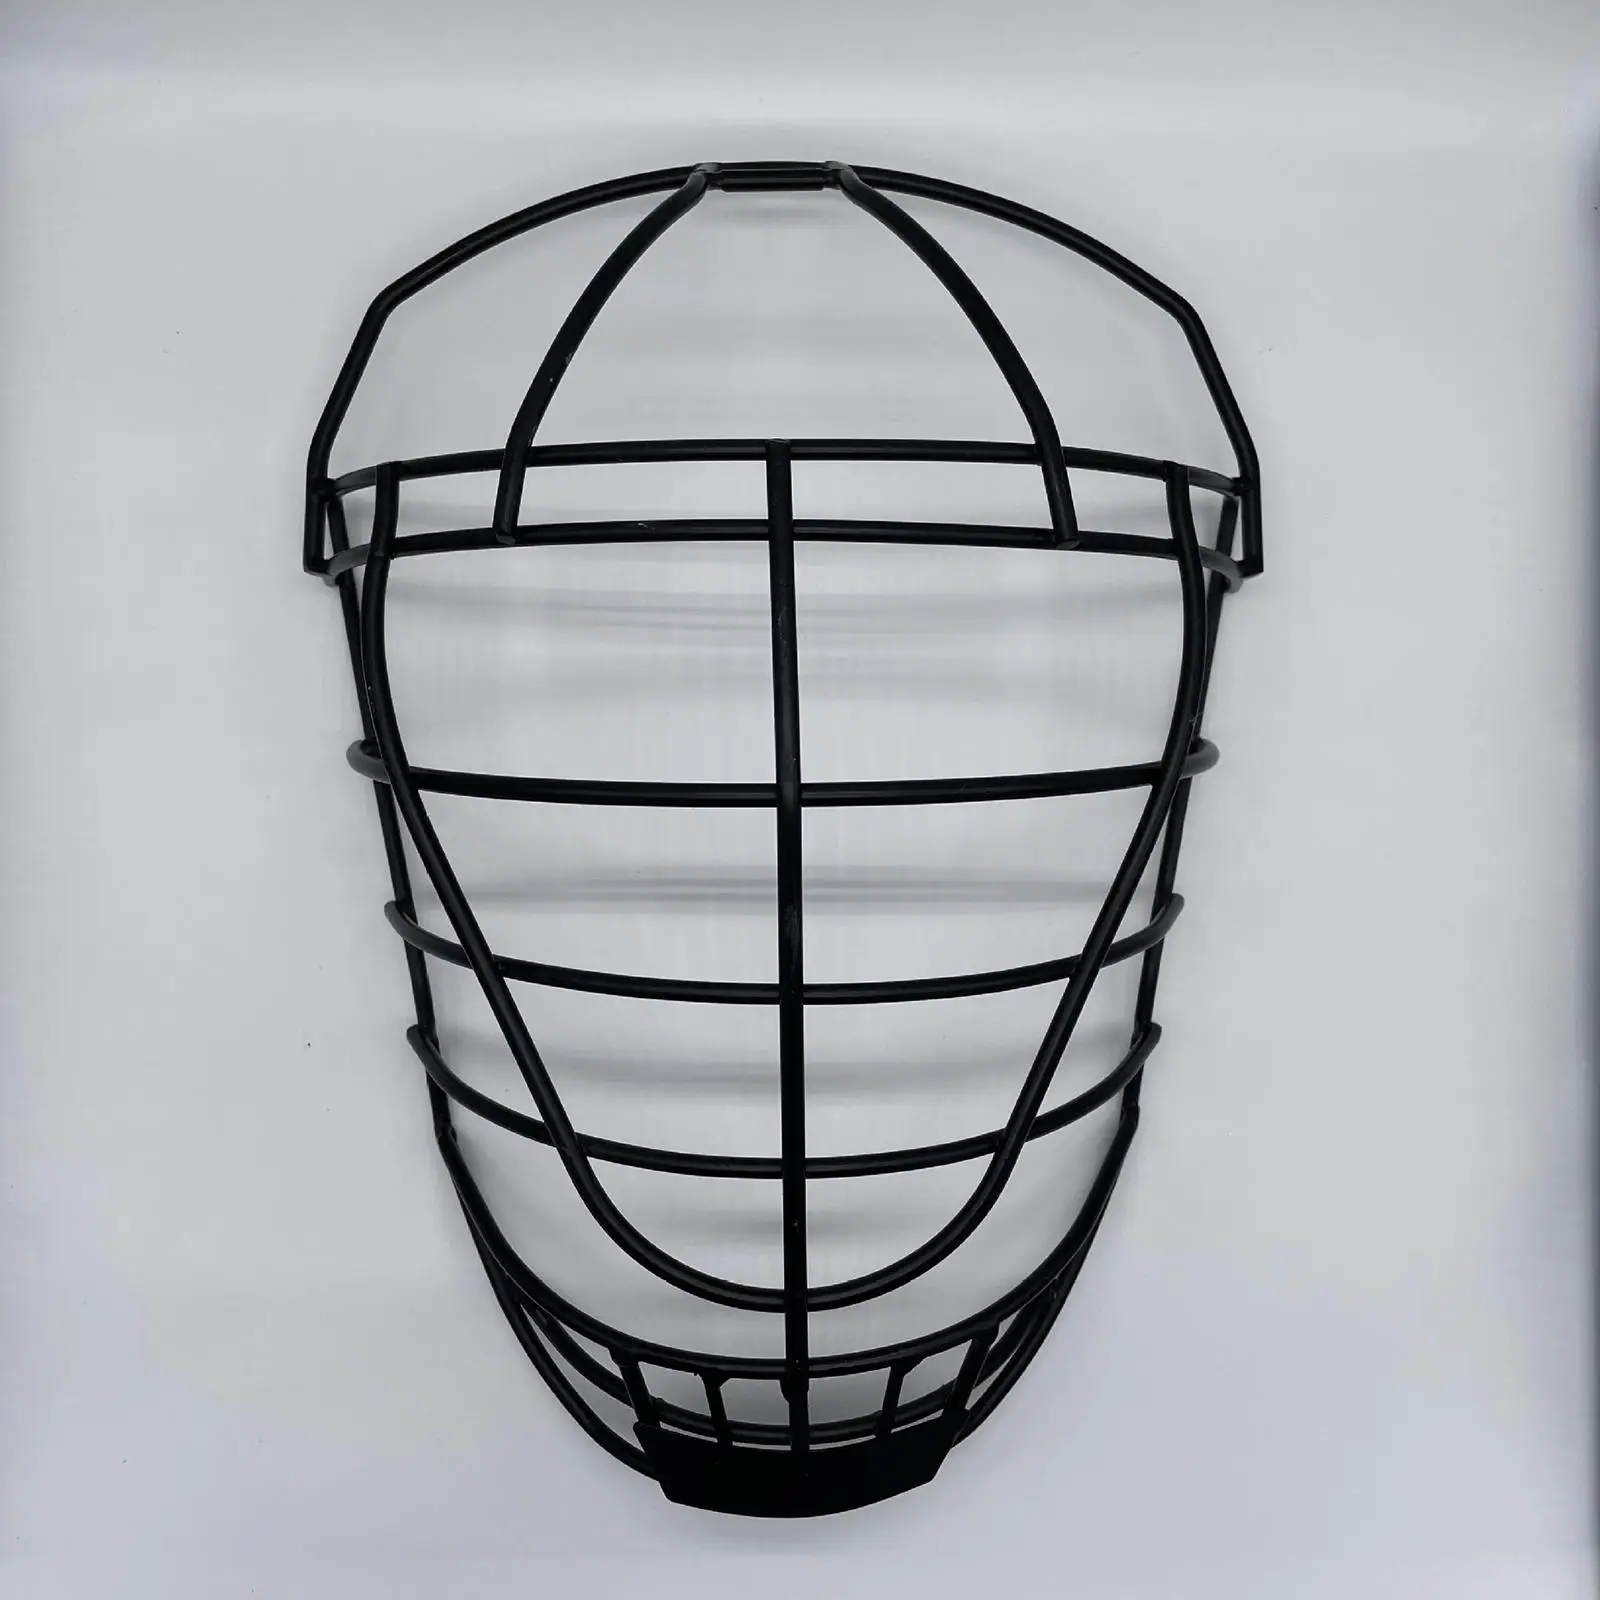 Universal Batting Equipment Lightweight Safety Wide Vision Baseball Face Guard for Softball Teeball Outdoor 